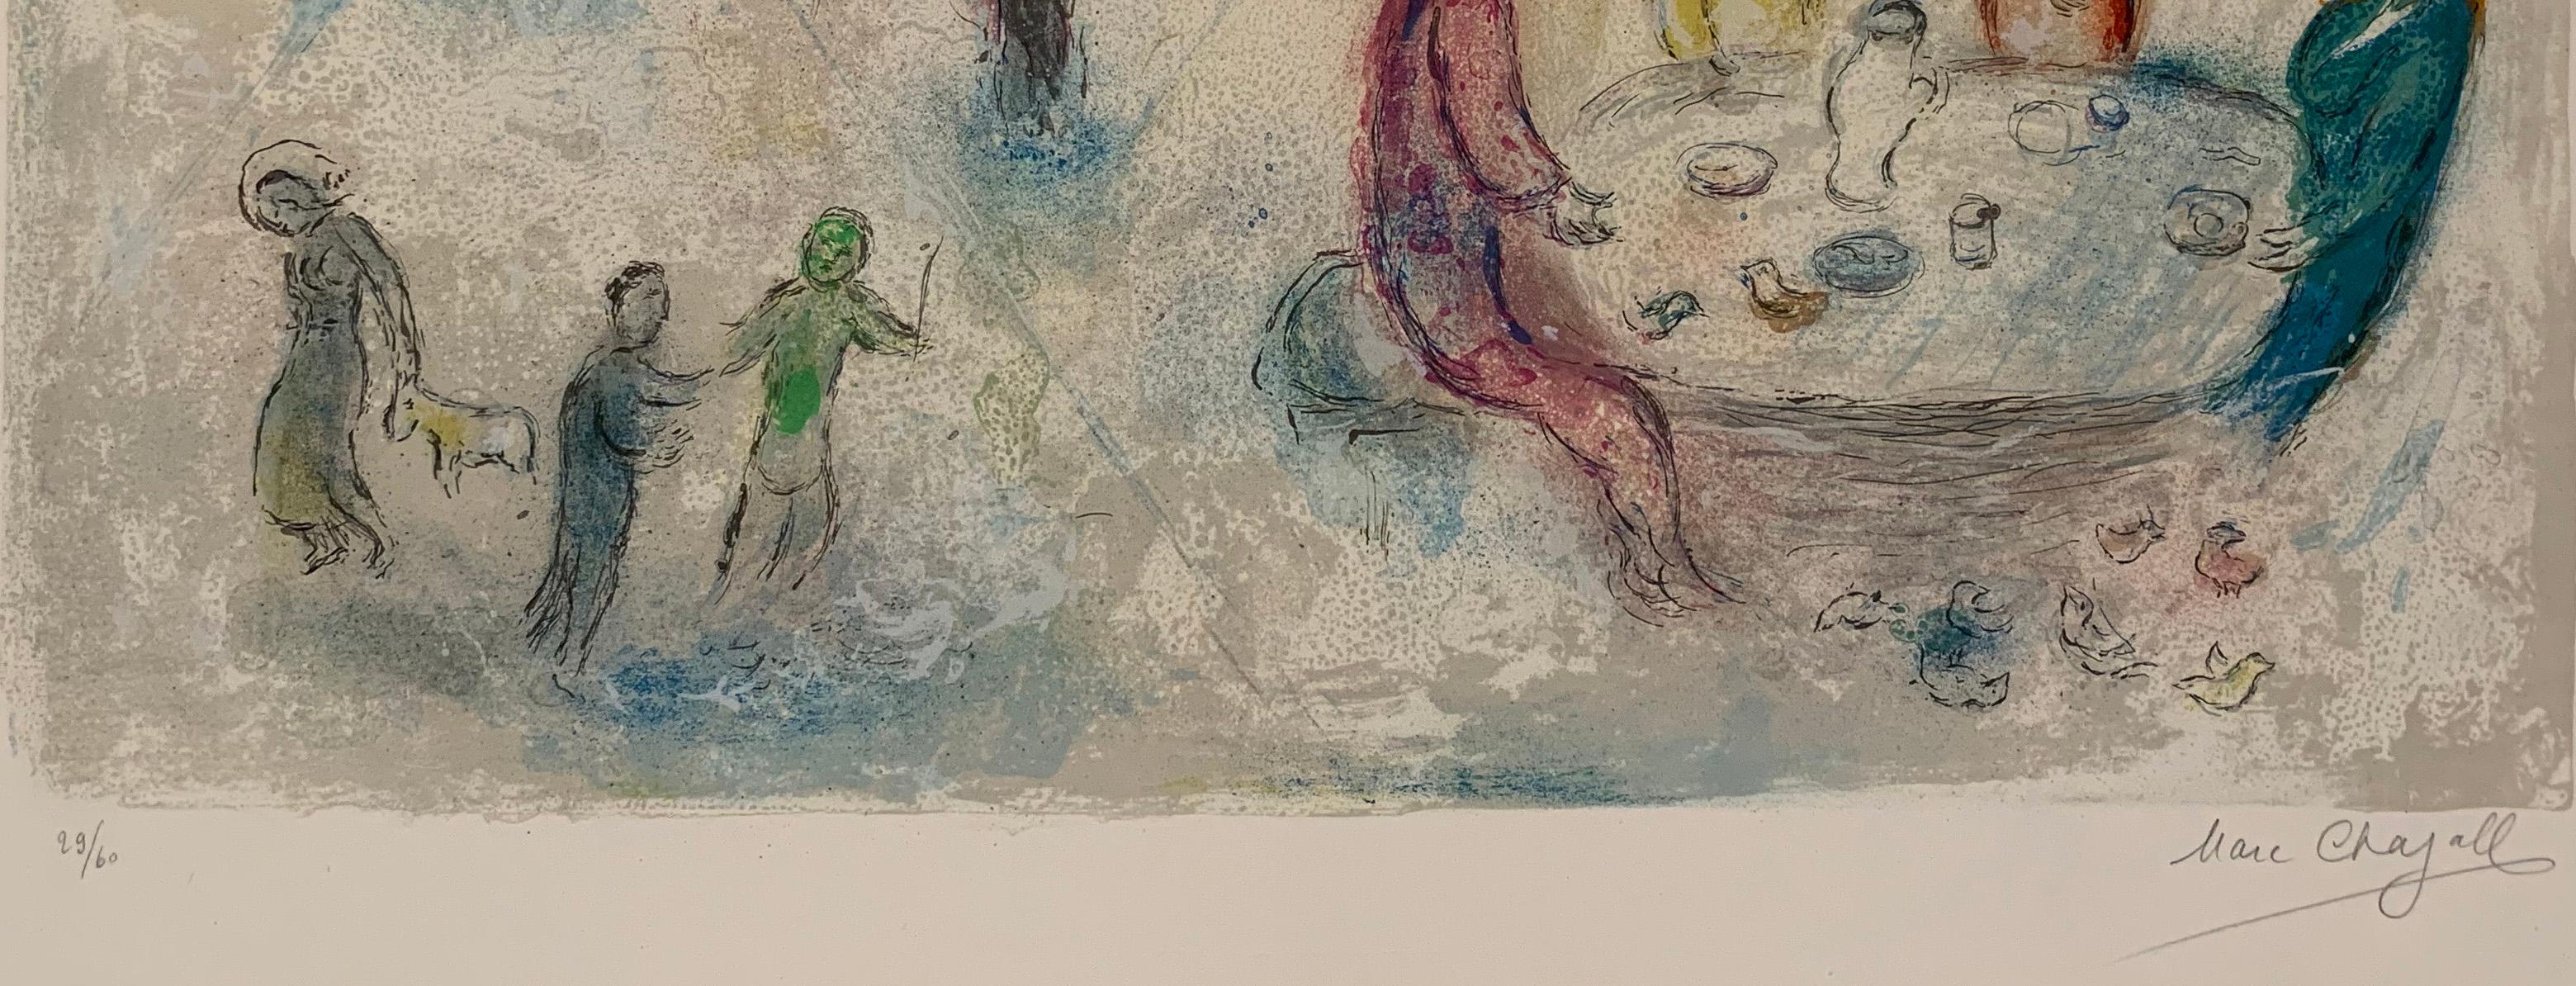 daphnis et chloe chagall